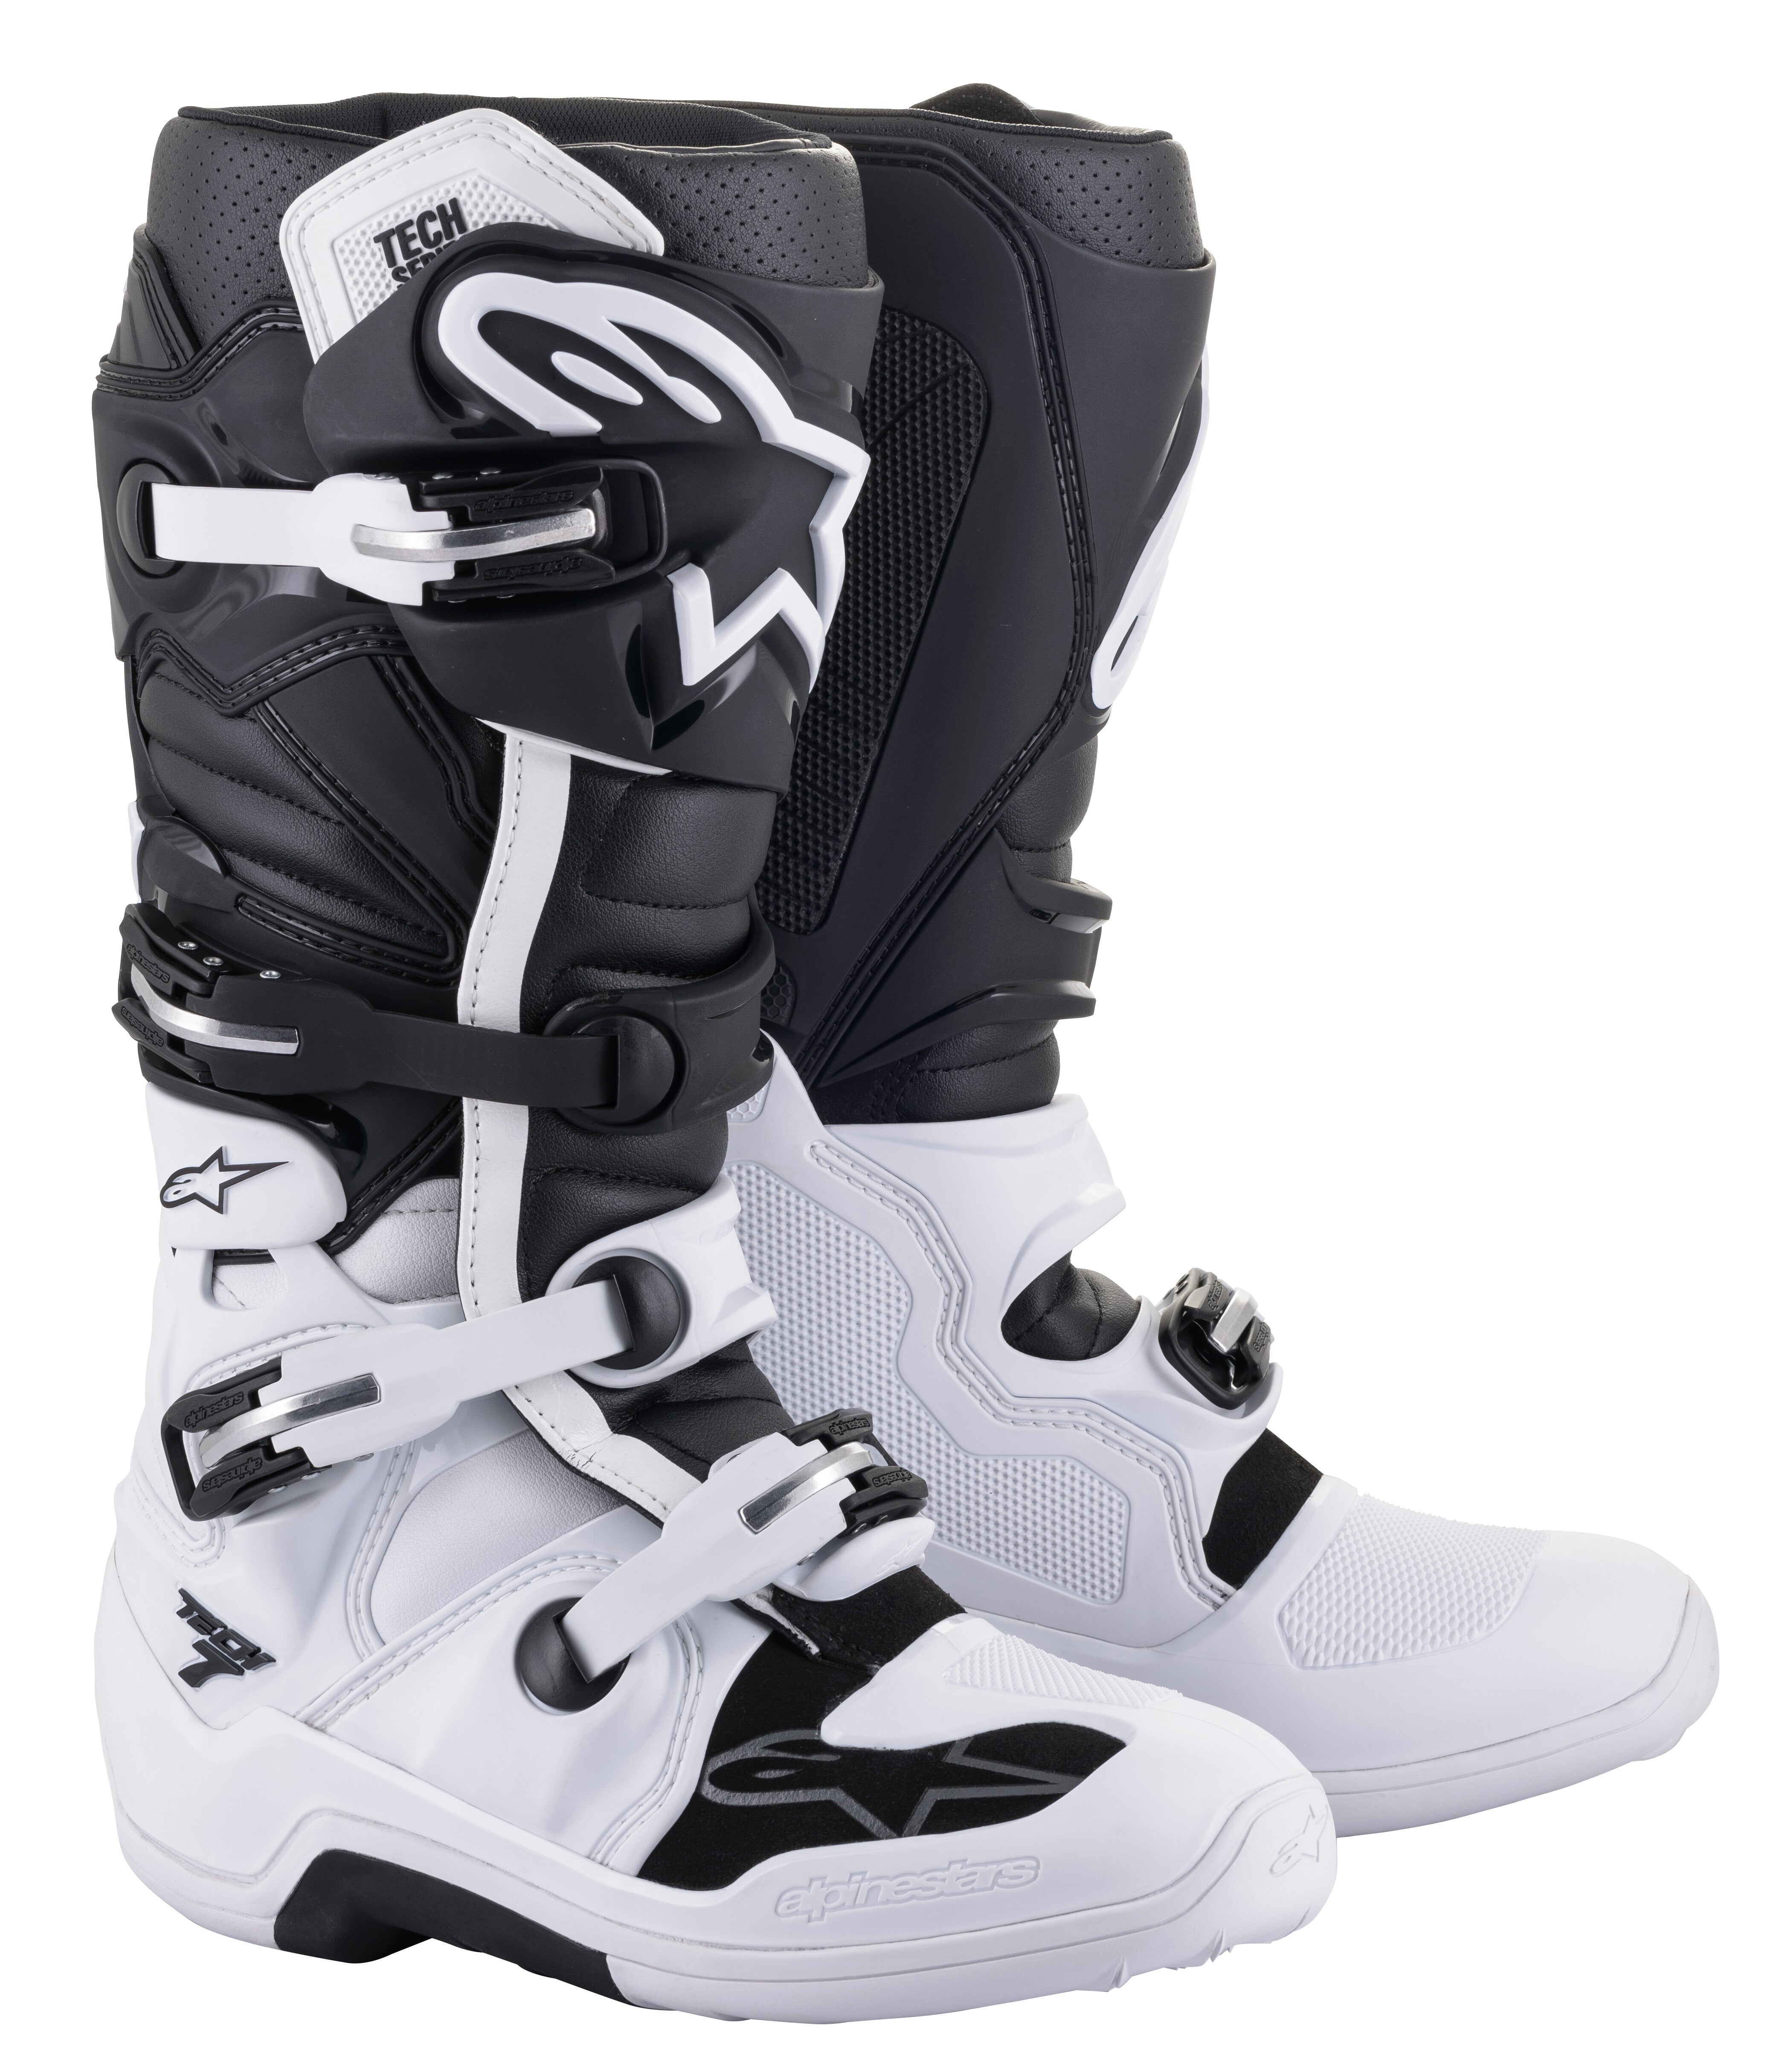 Alpinestars Tech 7 Mx Boots White/Black Us 10 2012014-21-10